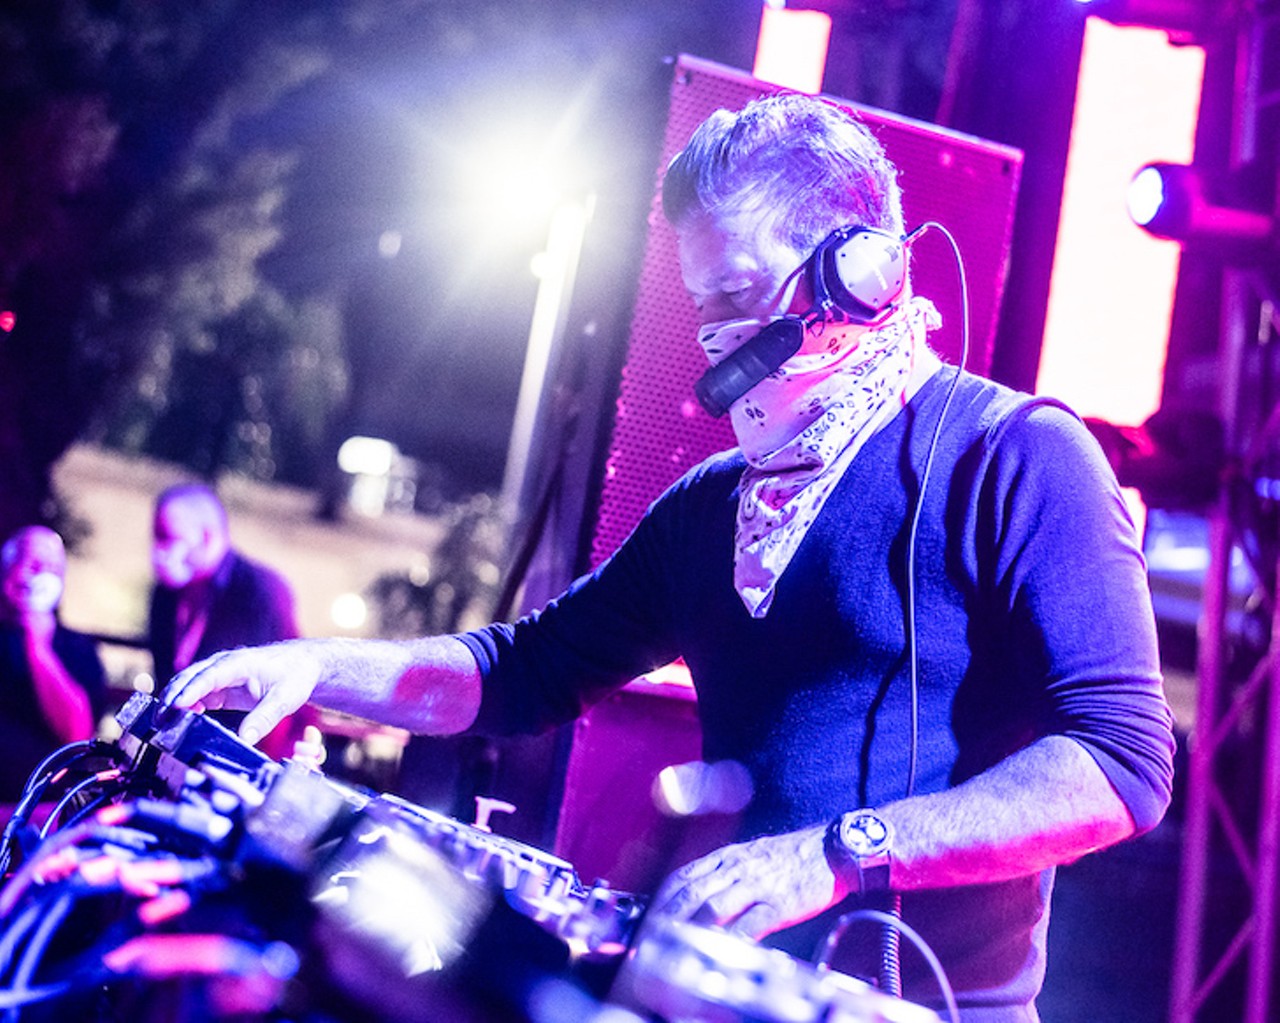 Trailblazing DJ Paul Oakenfold spun an entrancing outdoor set in downtown Orlando